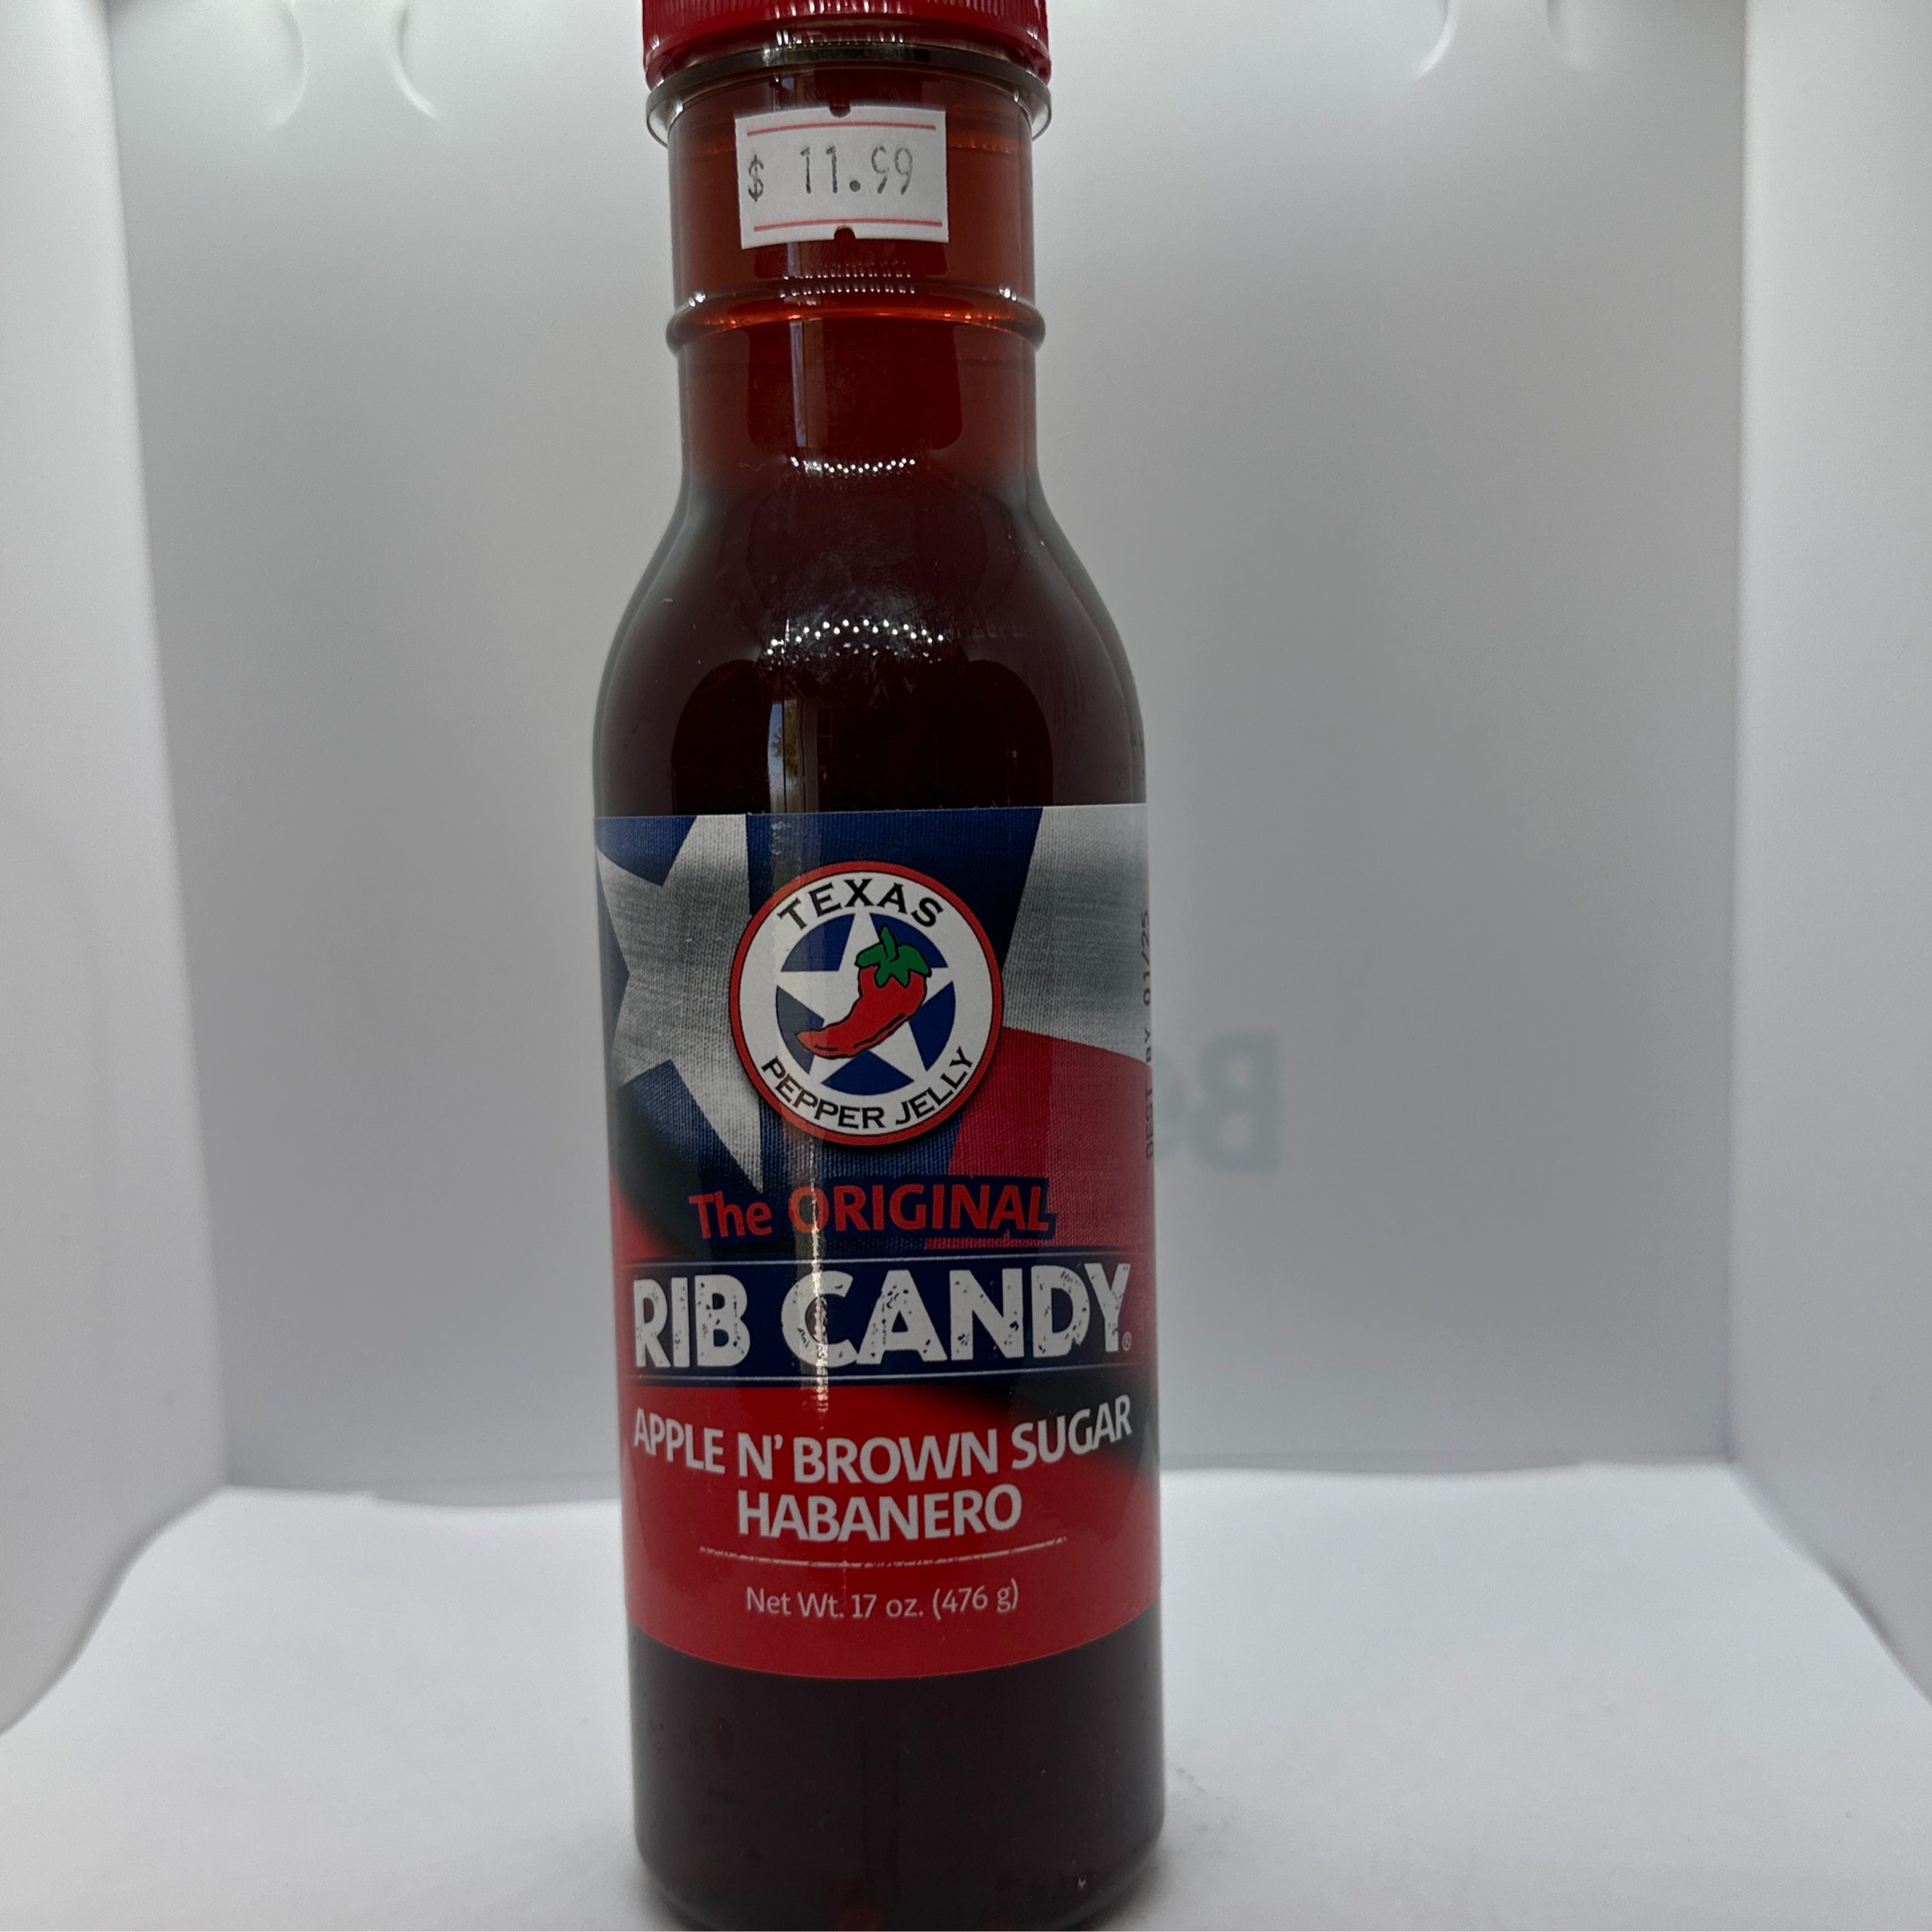 Texas Pepper Jelly Apple N Brown Sugar Habanero Rib Candy 12oz reviews - BBQ  Spit Rotisseries - Trustpilot